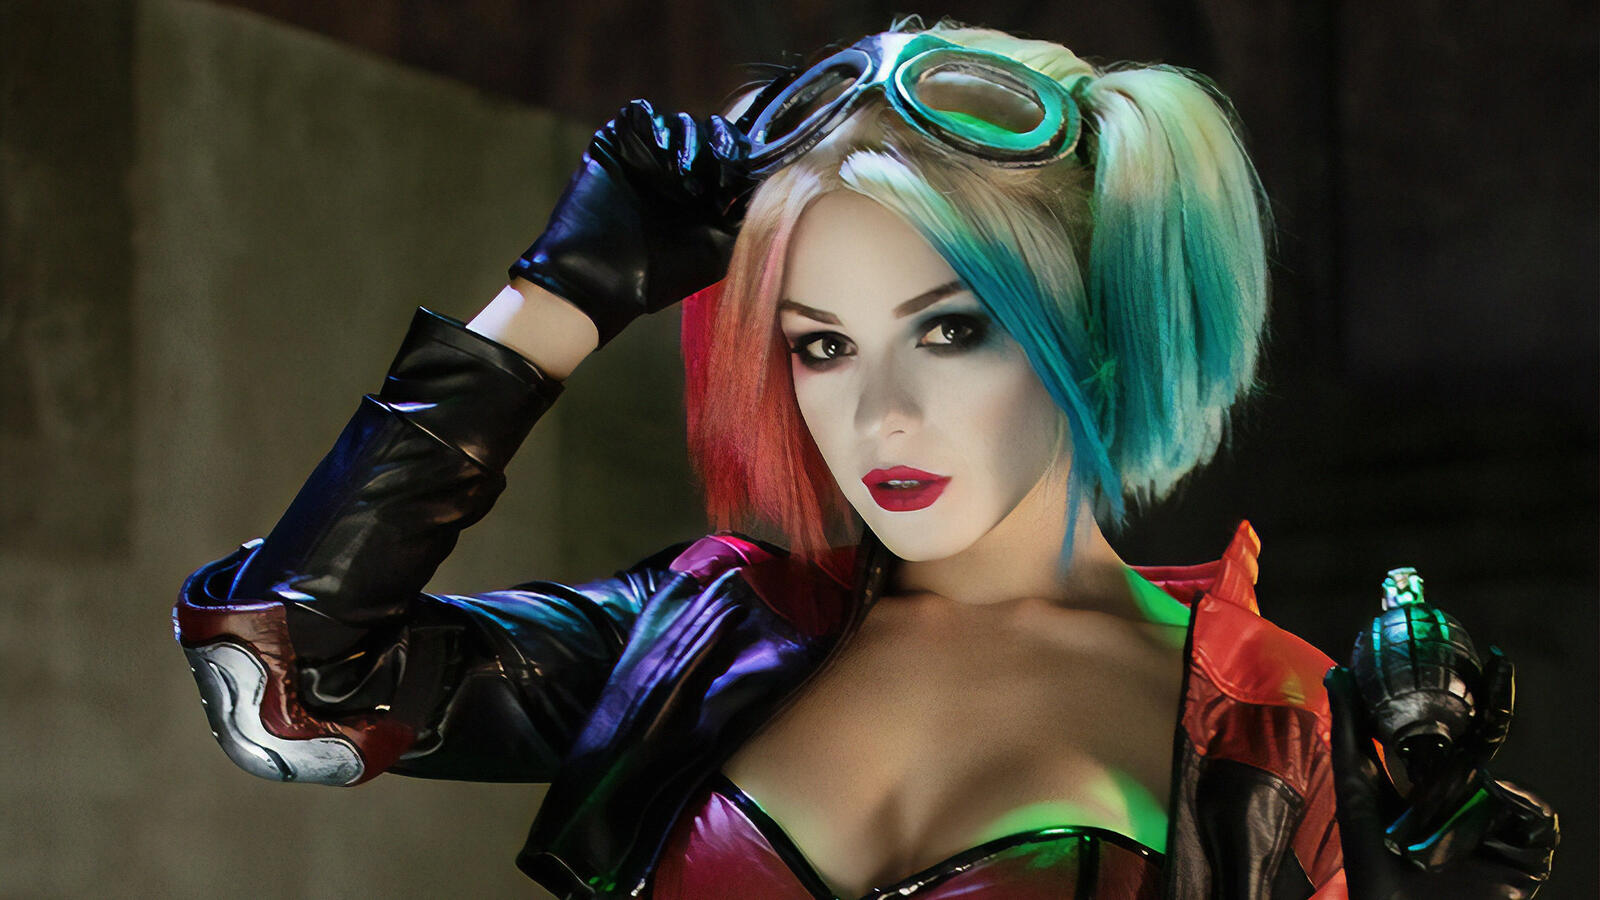 Wallpapers Harley Quinn cosplay supervillain on the desktop